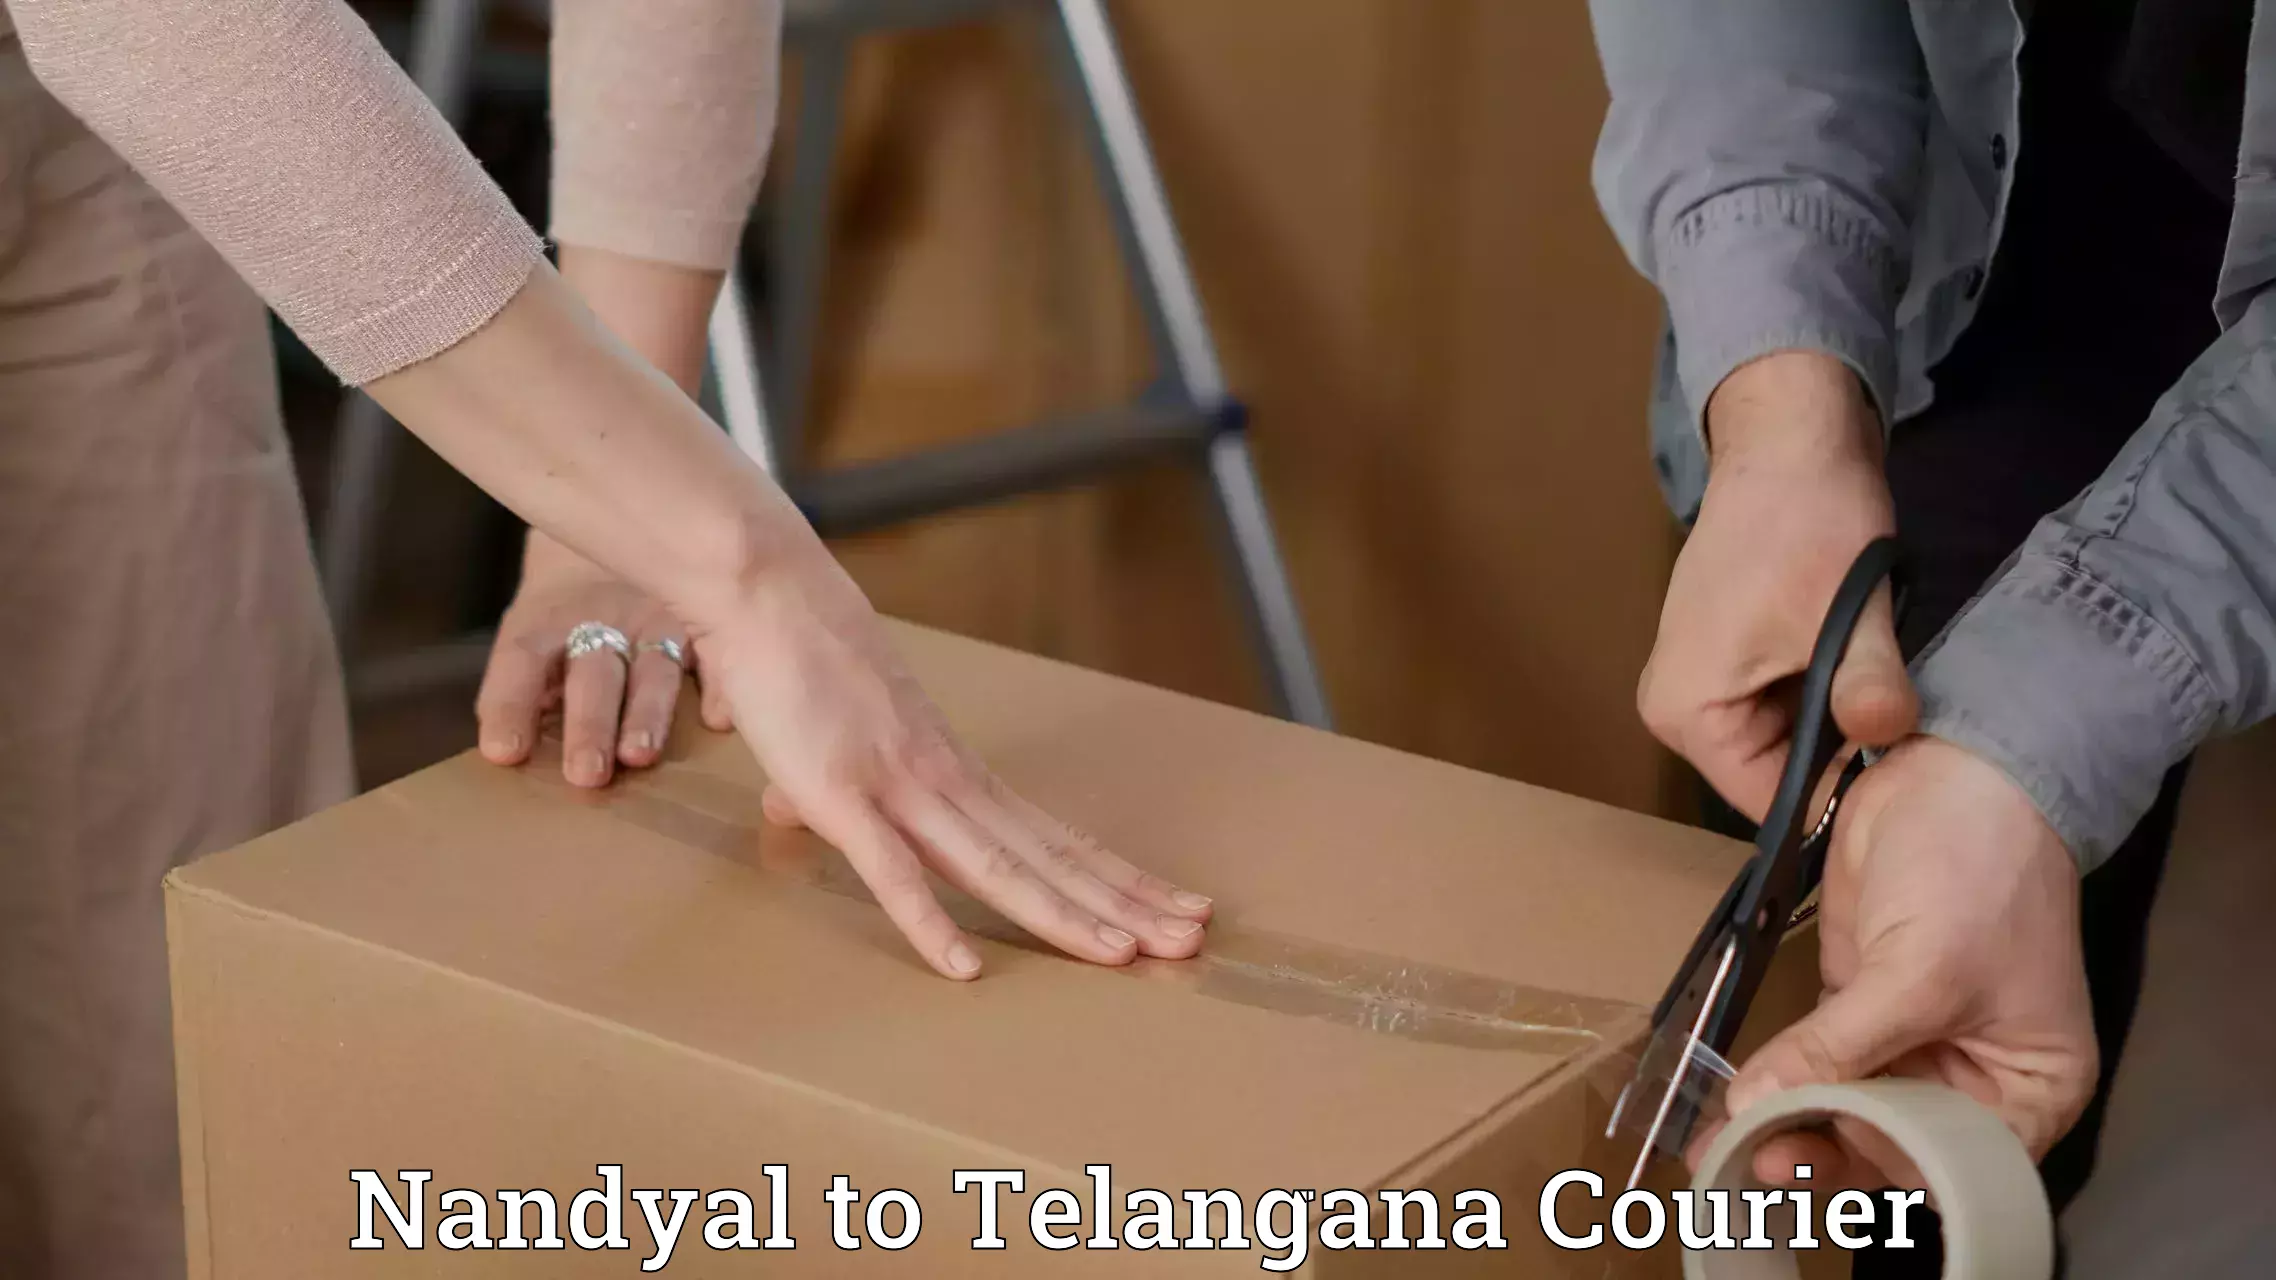 Courier service comparison Nandyal to Rangareddy